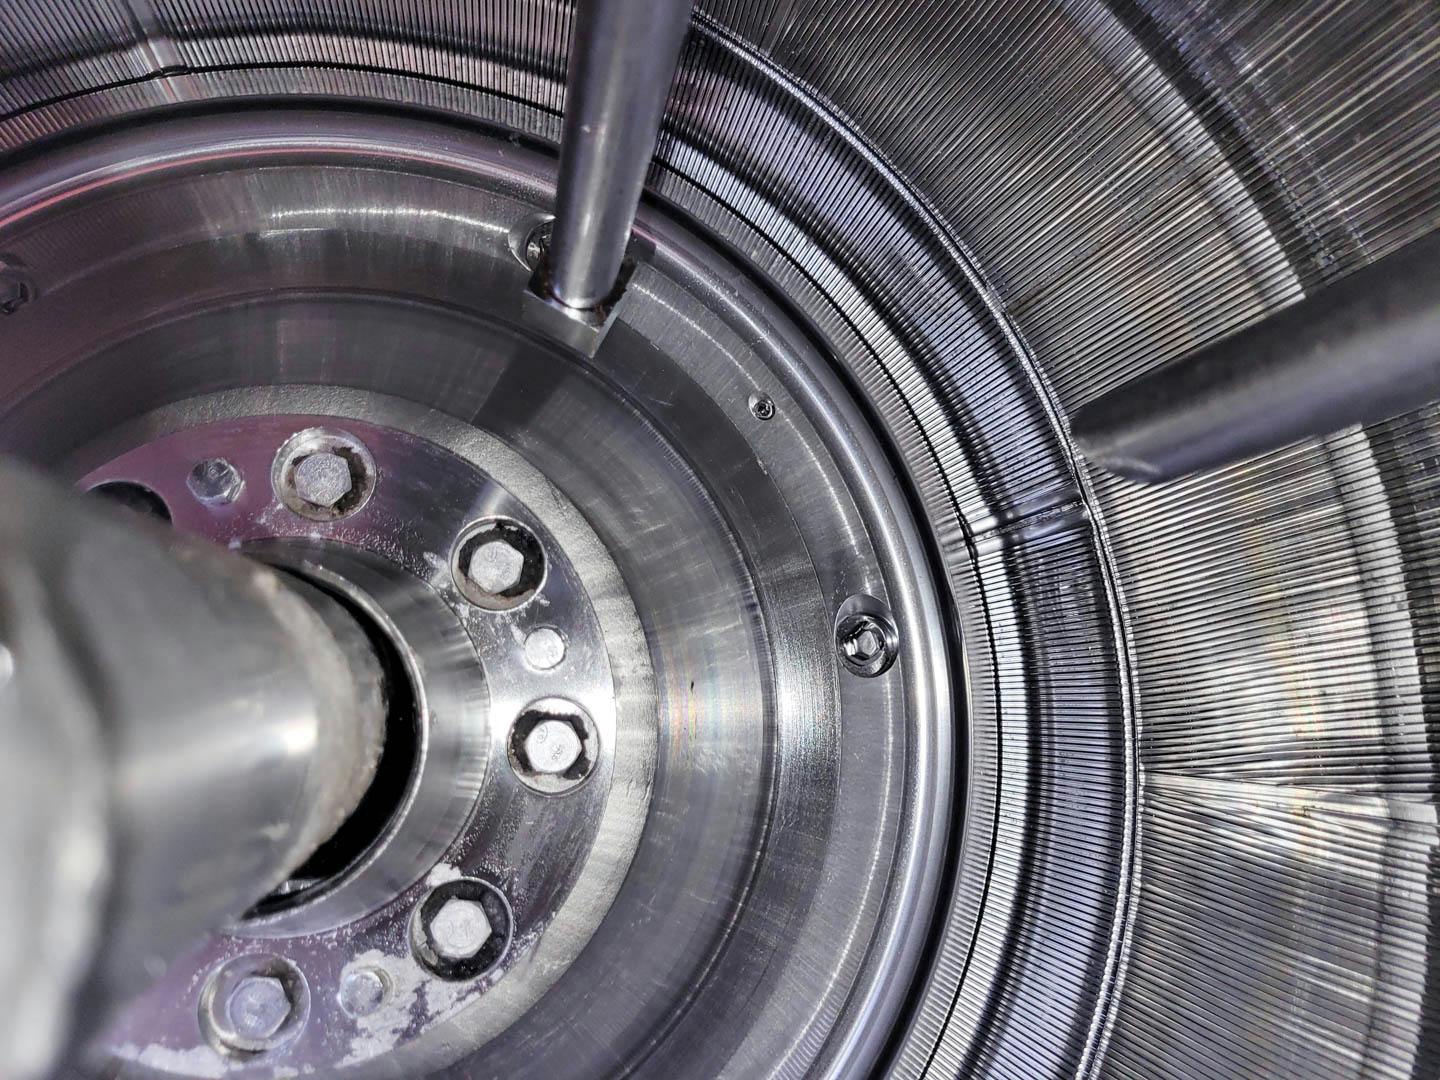 Krauss Maffei SZ 51-8 - Pusher centrifuge - image 7